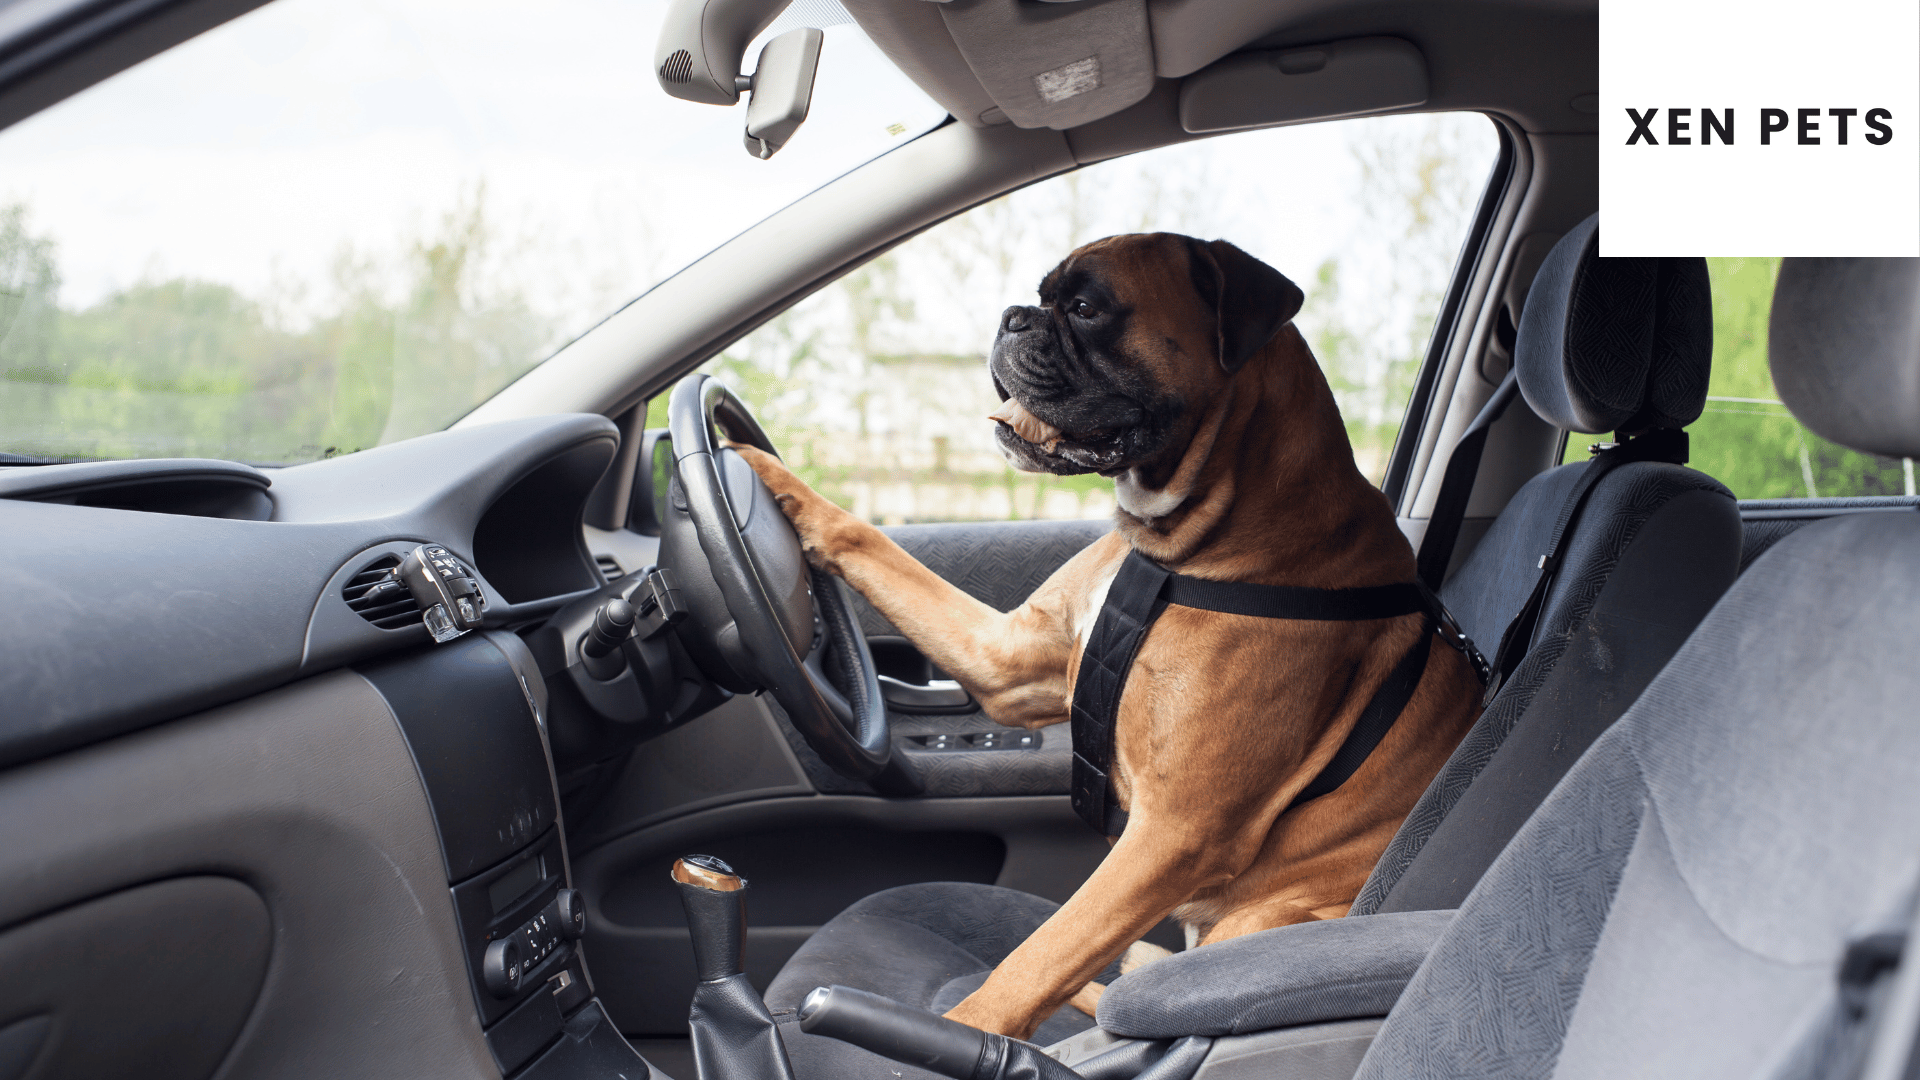 How To Calm An Anxious Dog in a Car